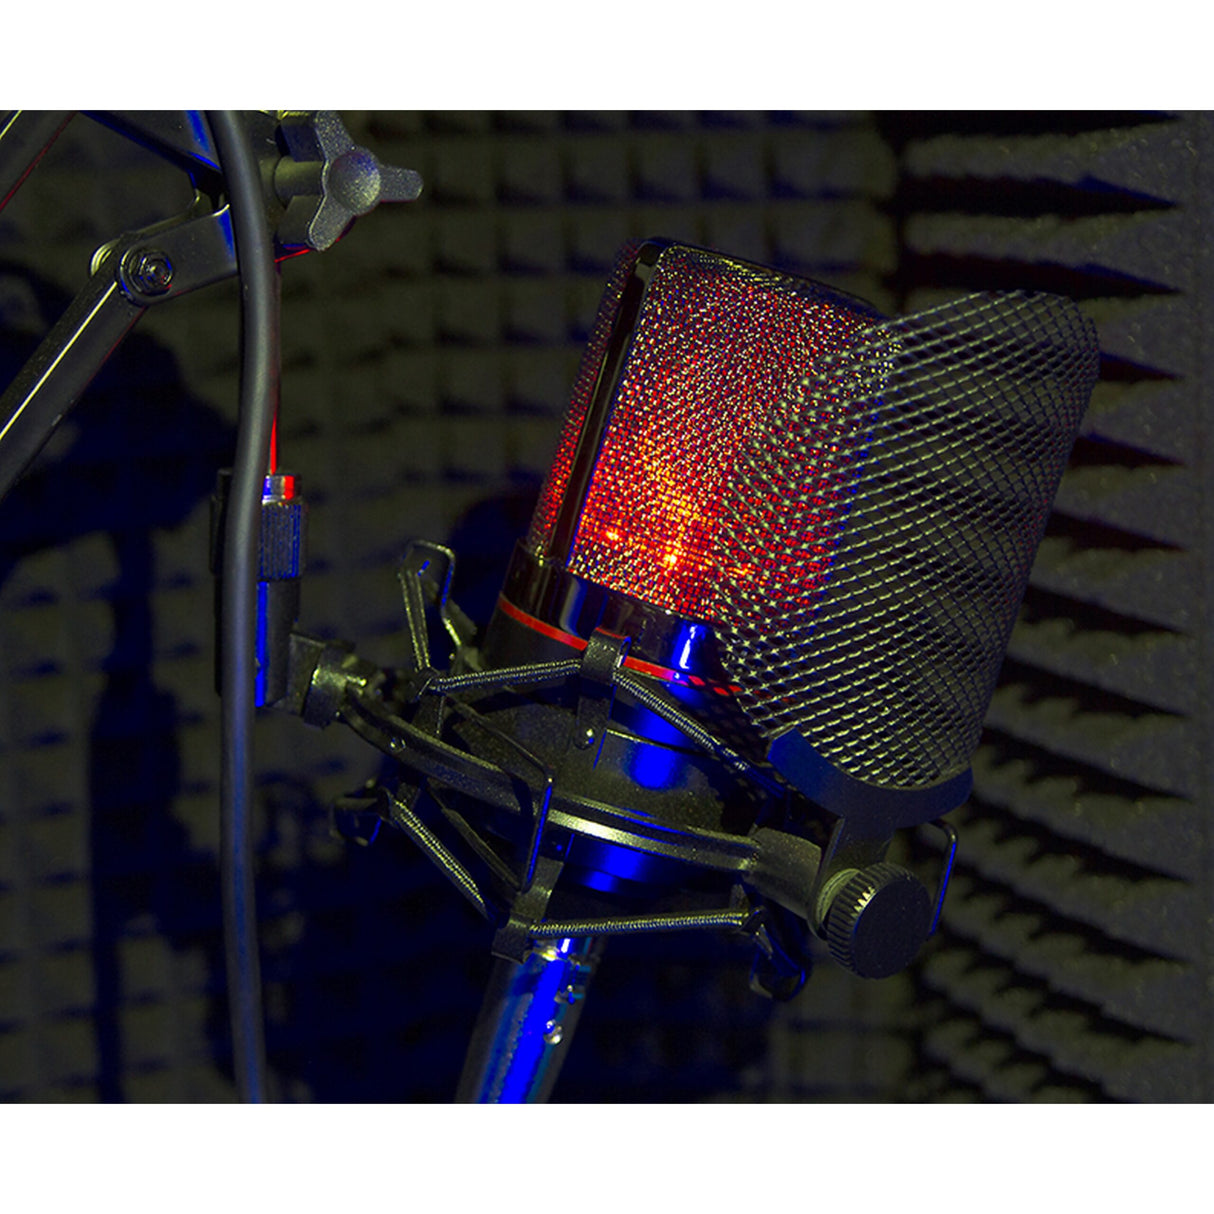 MXL 990 Blaze LED Large Diaphragm Condenser Microphone